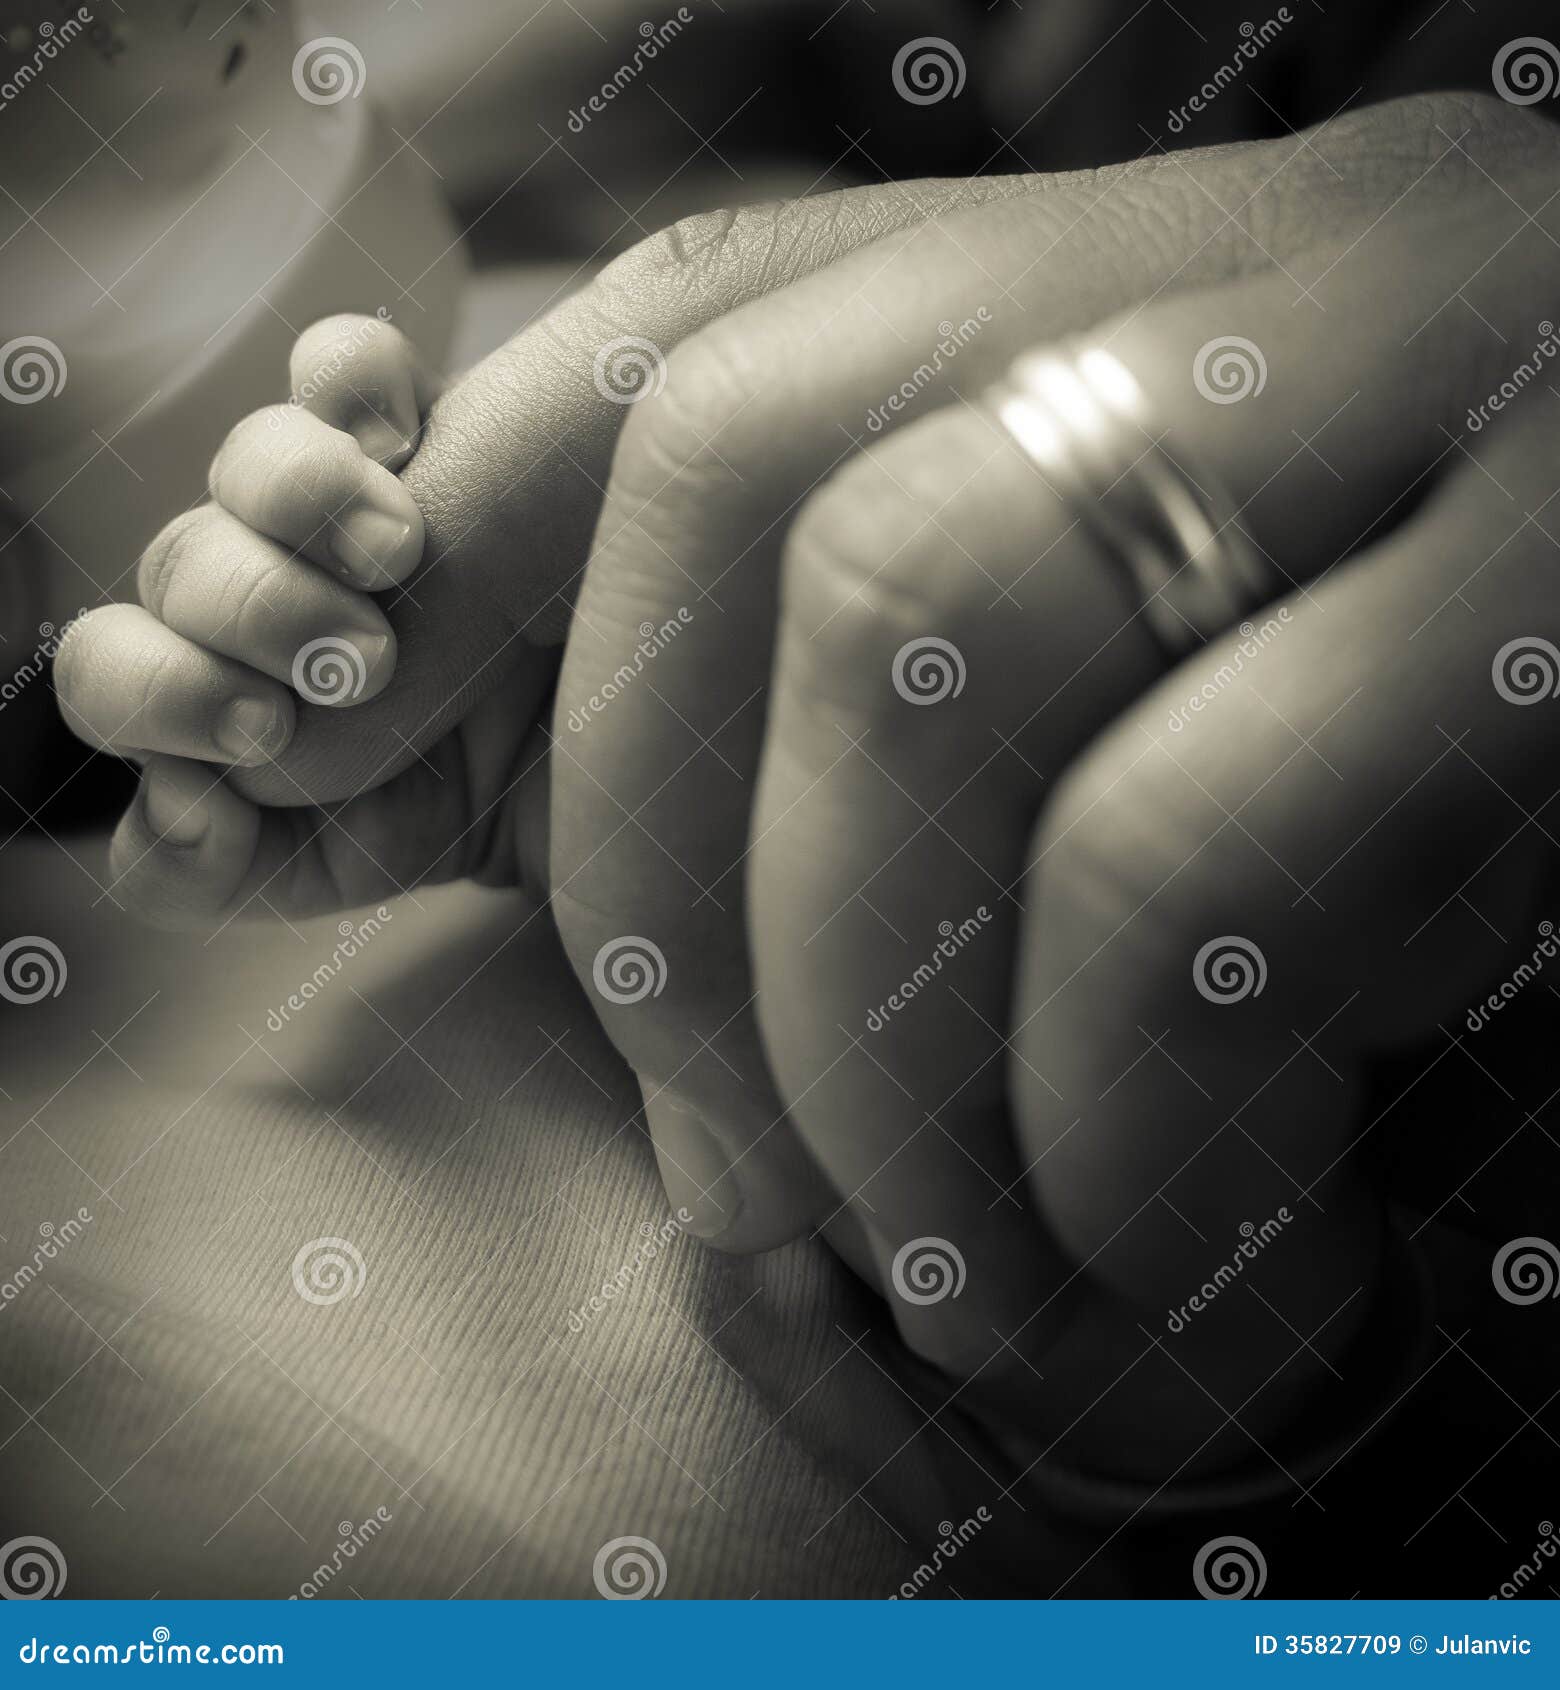 Baby Grabbing Dad's Finger Stock Photos - Download 8 ...